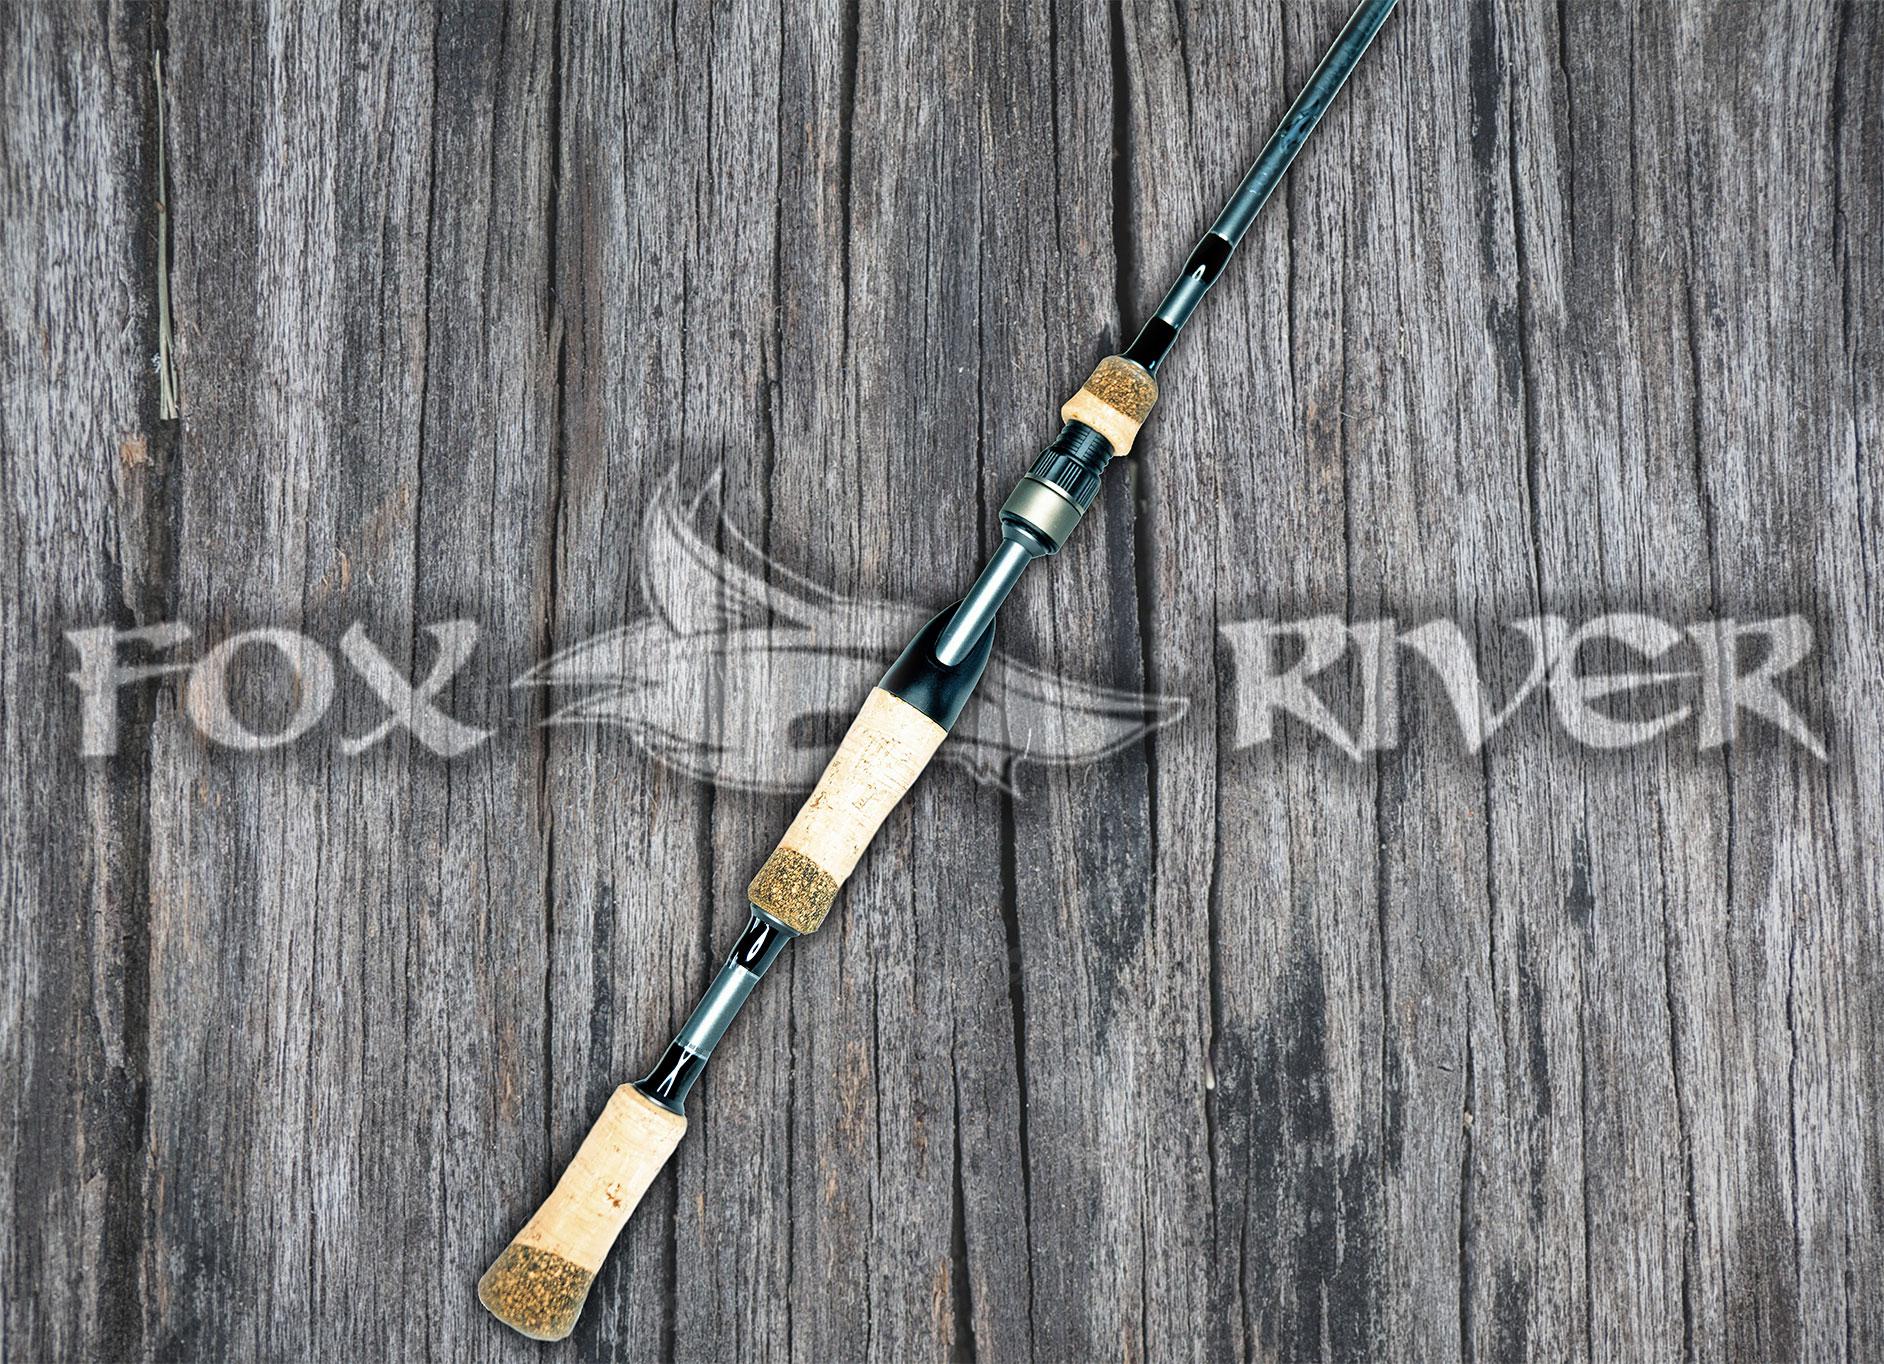 Fox River Lures and Rods - 6' 6 Medium Light Split-Grip Spinning Rod